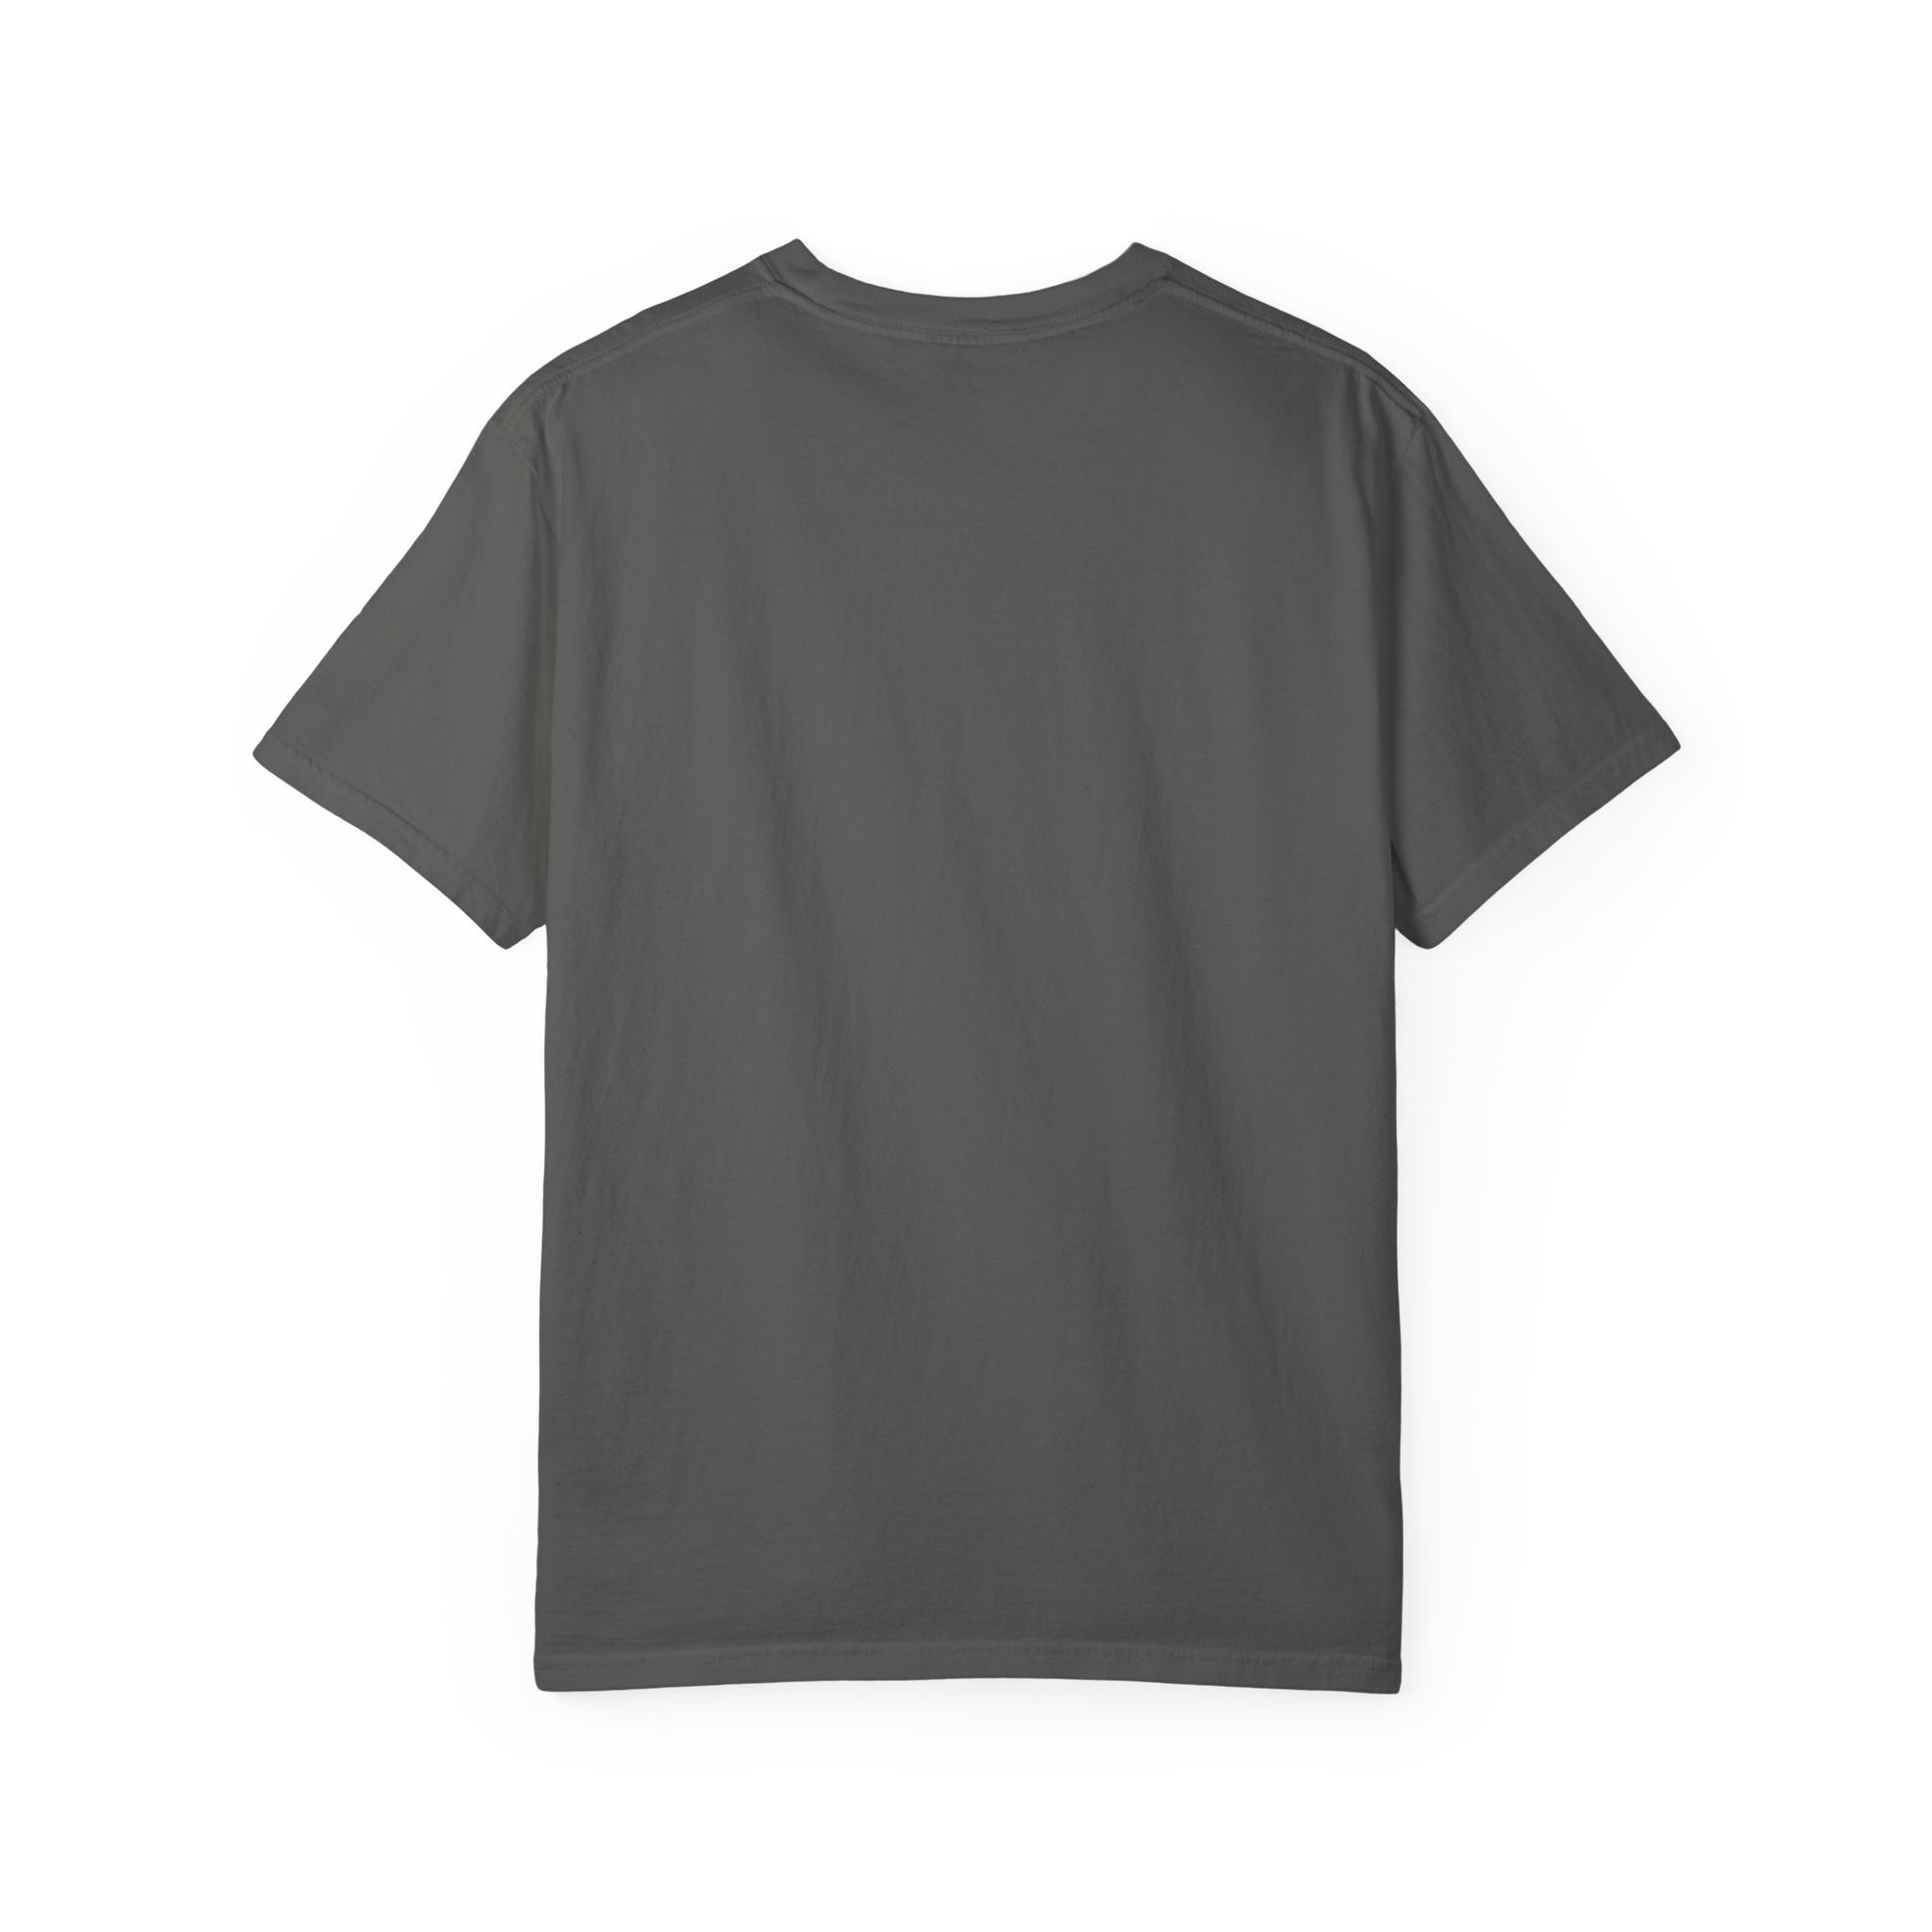 Hip Hop Teddy Bear Graphic Unisex Garment-dyed T-shirt Cotton Funny Humorous Graphic Soft Premium Unisex Men Women Pepper T-shirt Birthday Gift-49